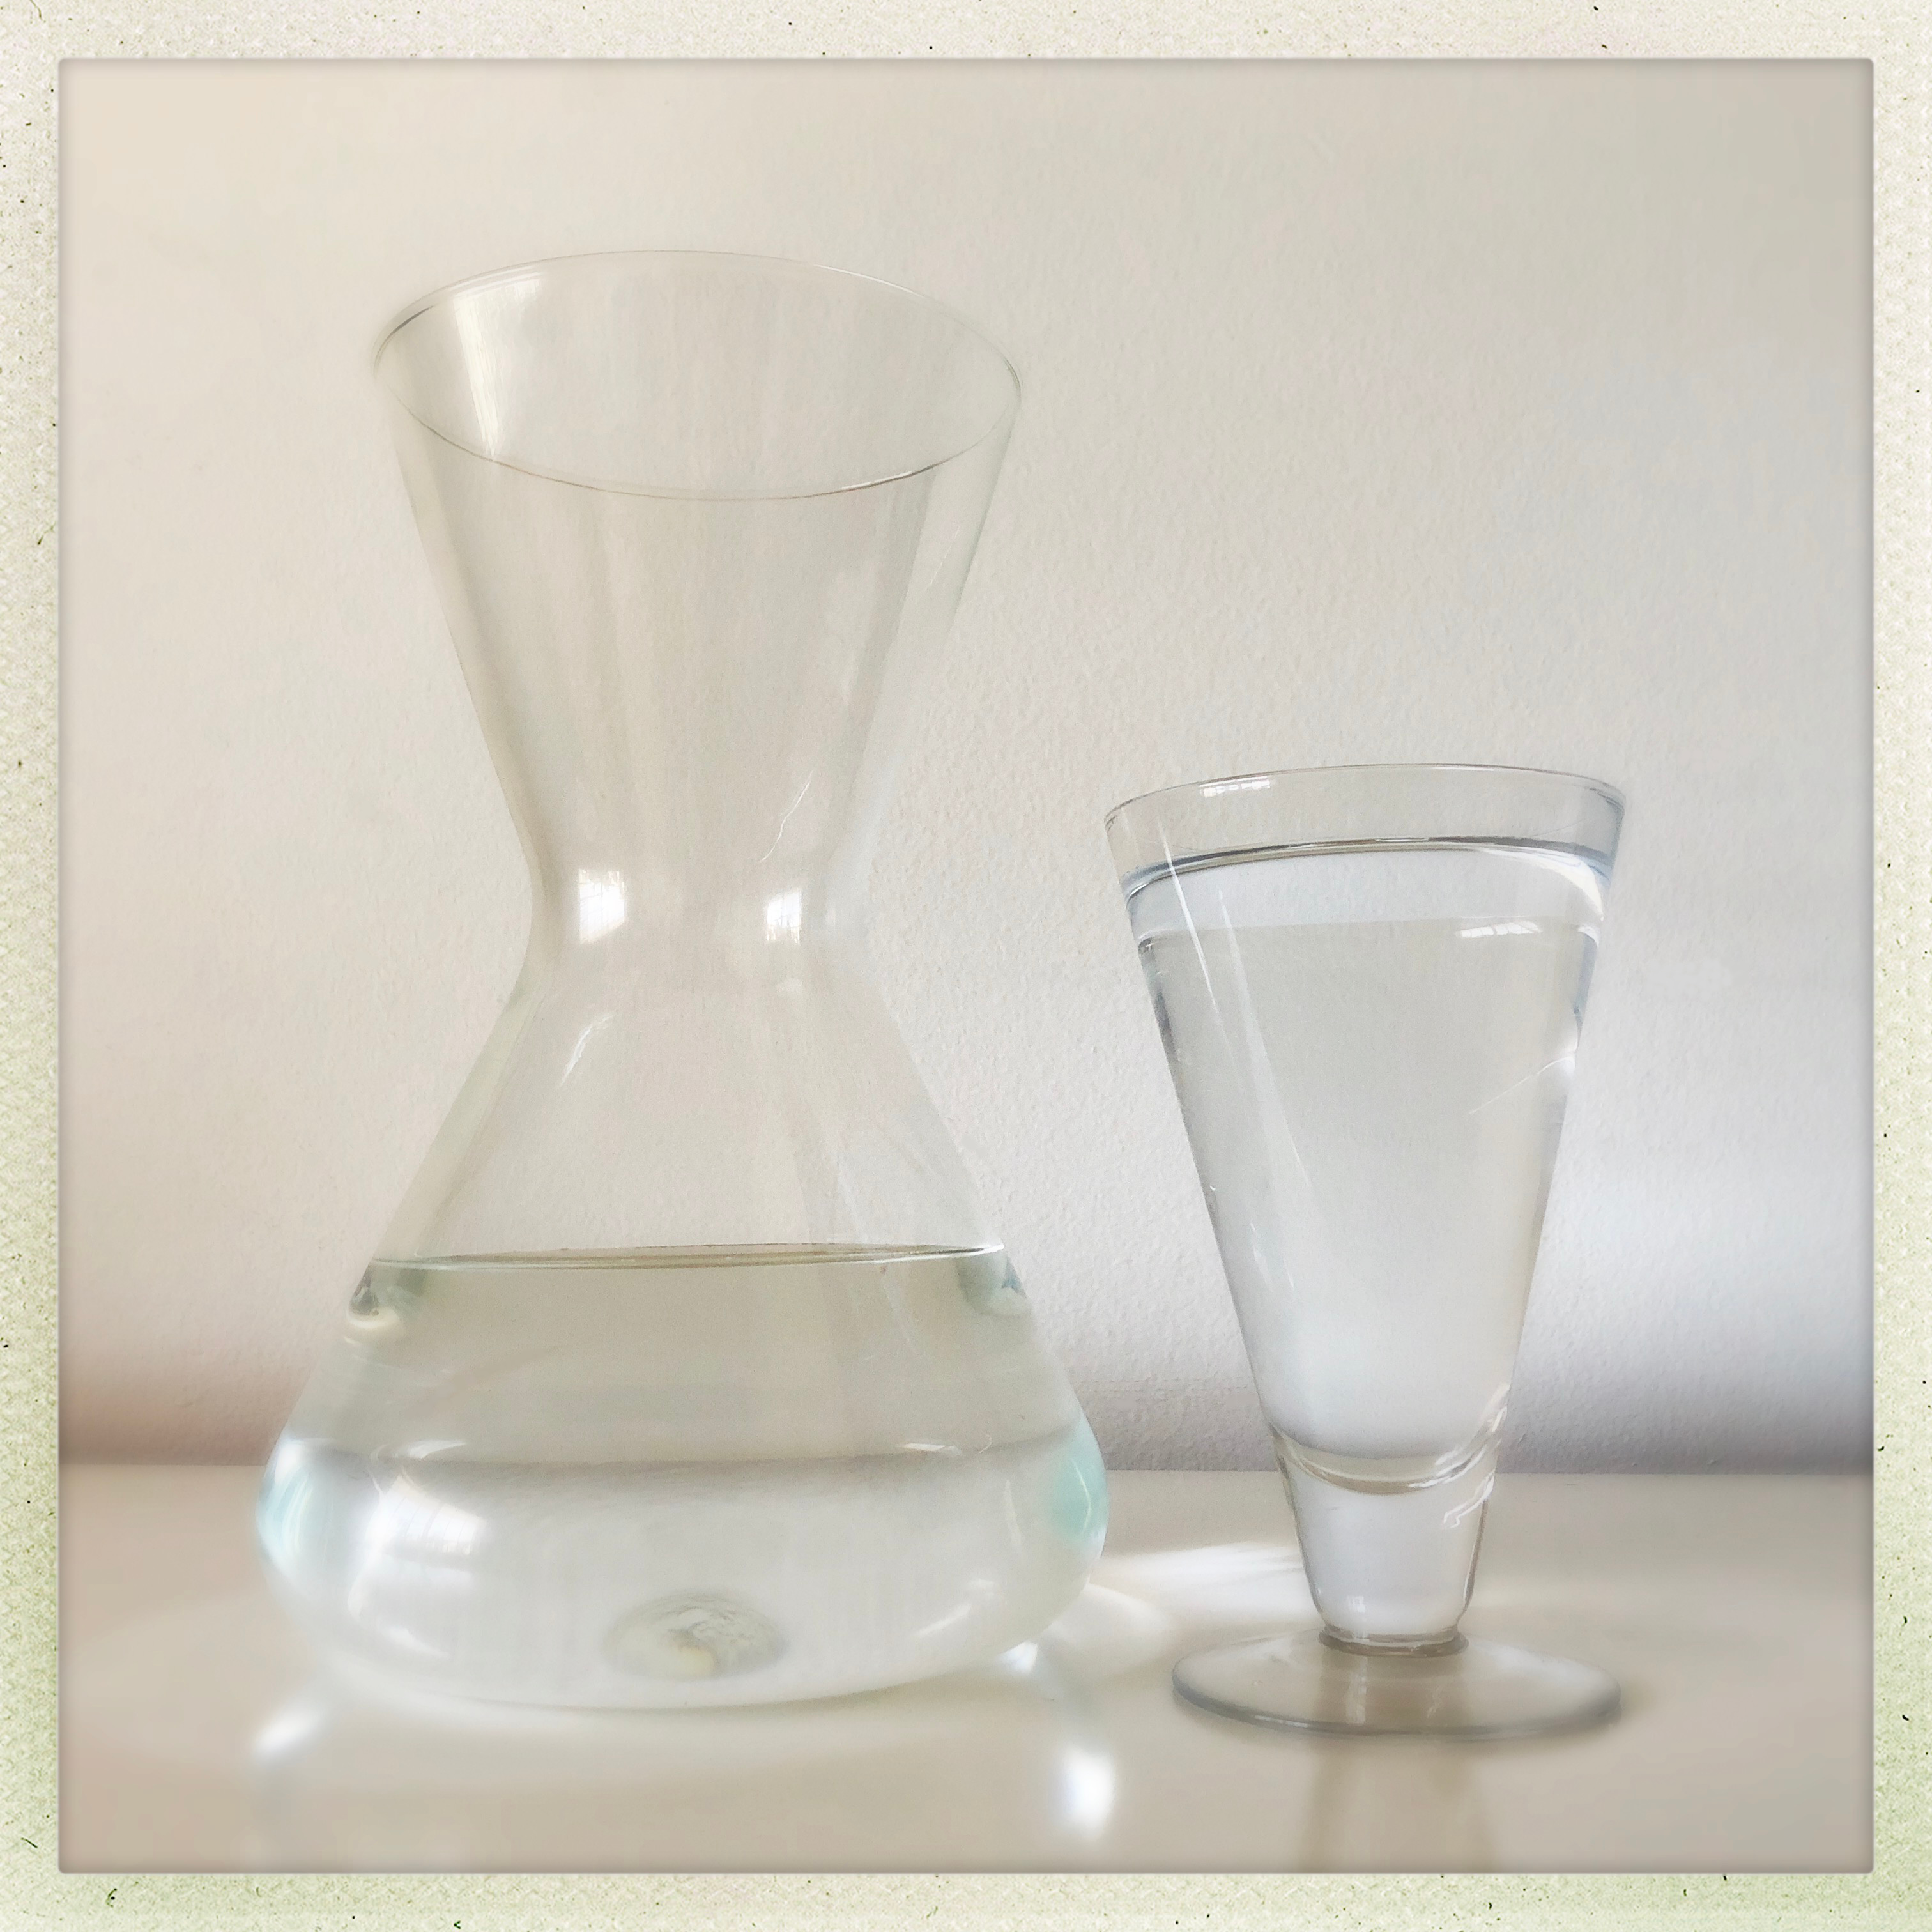 https://theswoonsociety.files.wordpress.com/2018/08/soma-water-carafe-with-tavern-shrub-glass.jpg